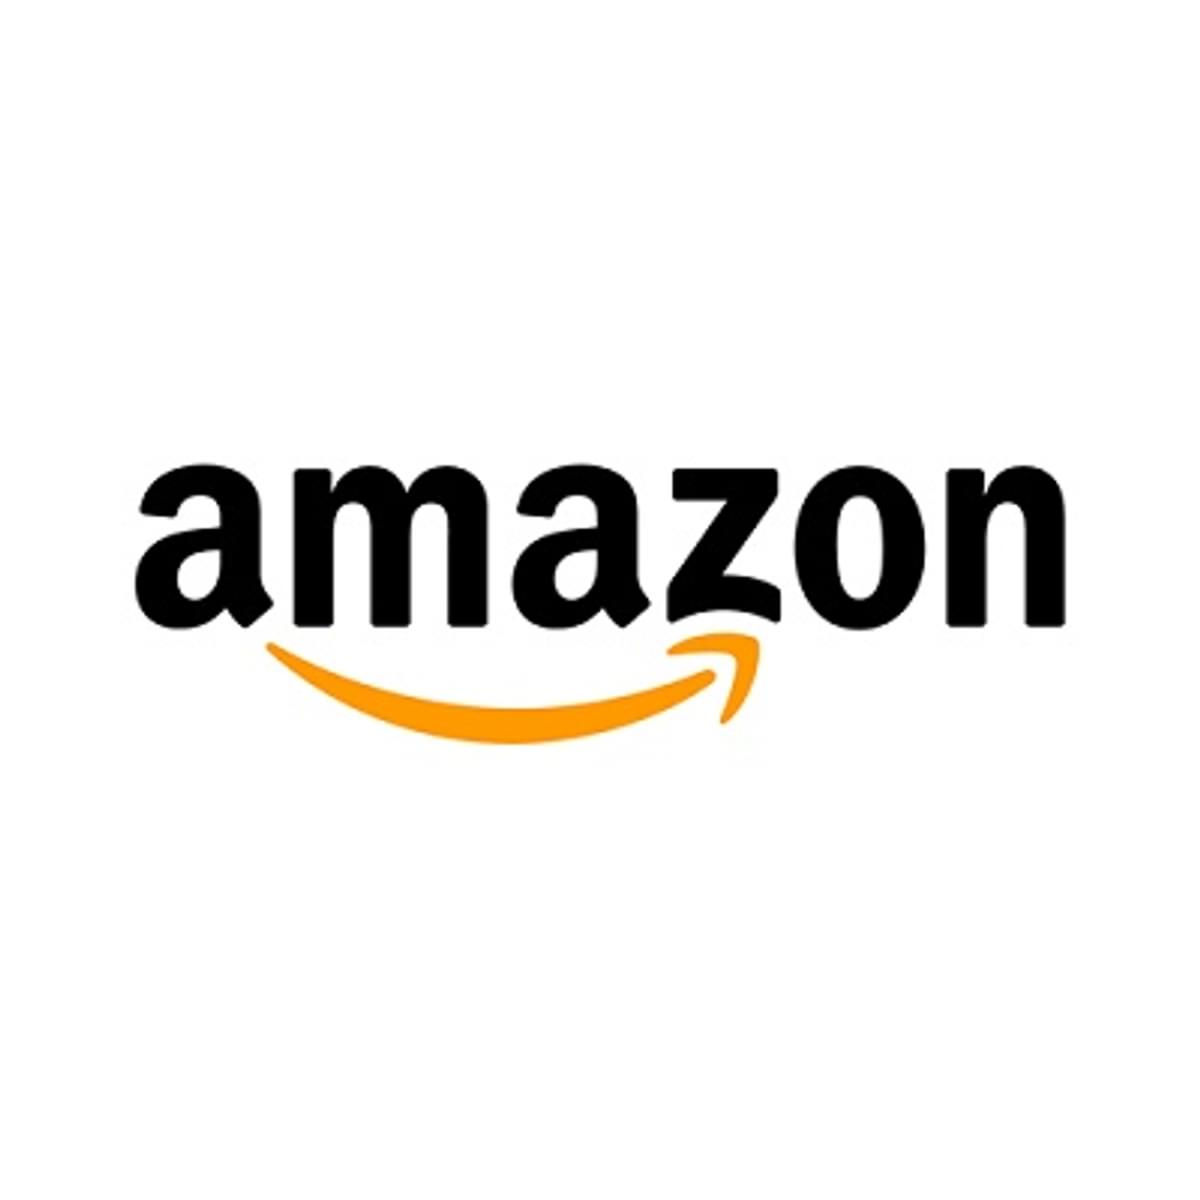 Amazon koopt voor 1 miljard dollar slimme deurbel technologie van Ring image